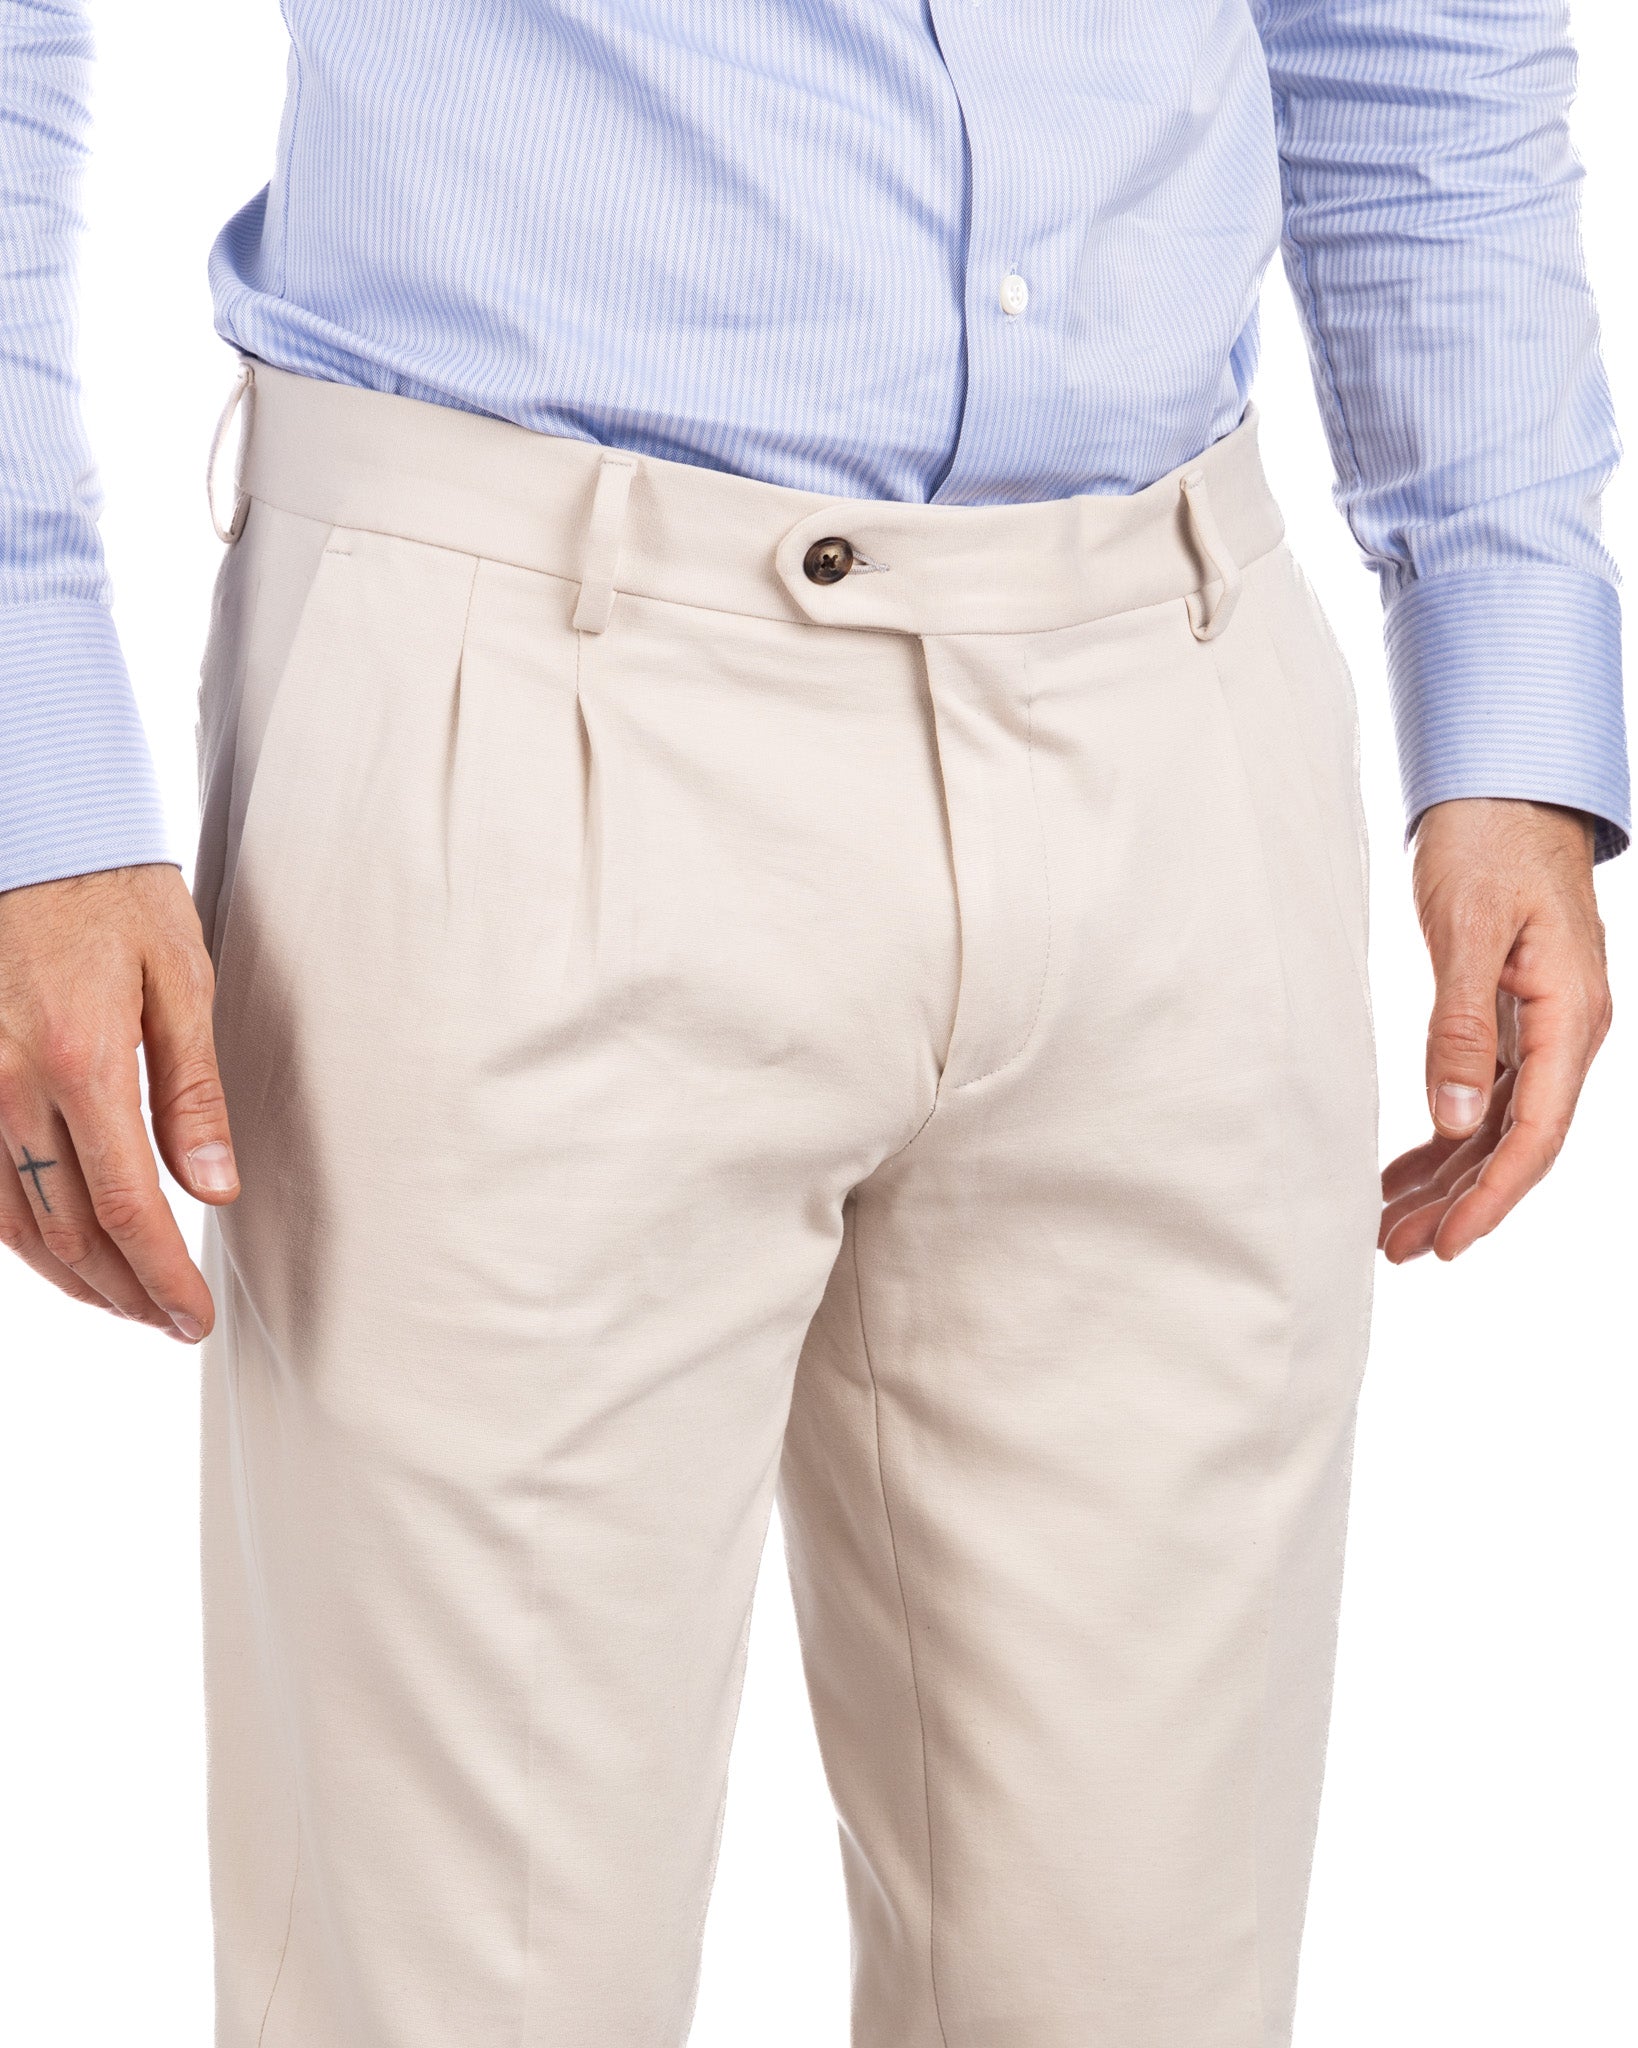 Thomas - cream two-pleat trousers in milano stitch